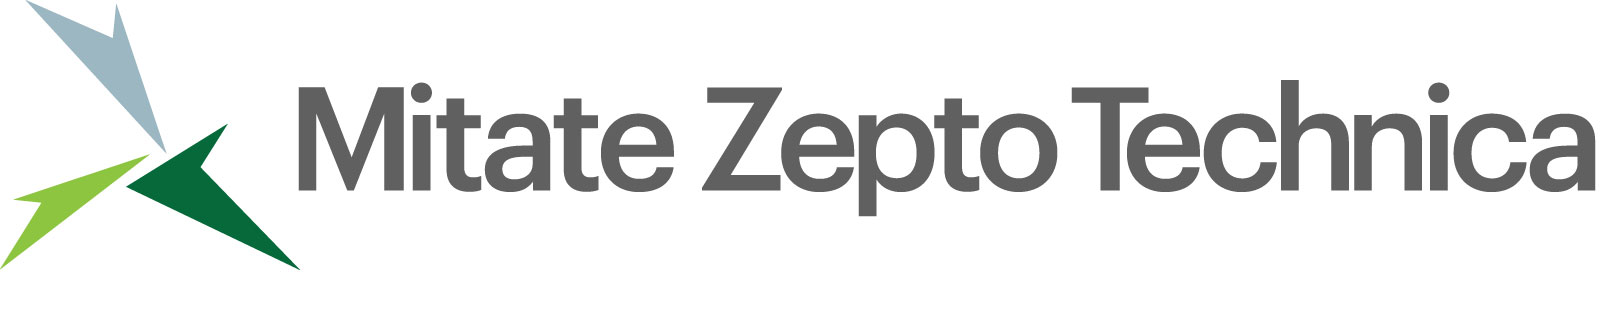 Mitate Zepto Technica, Inc.